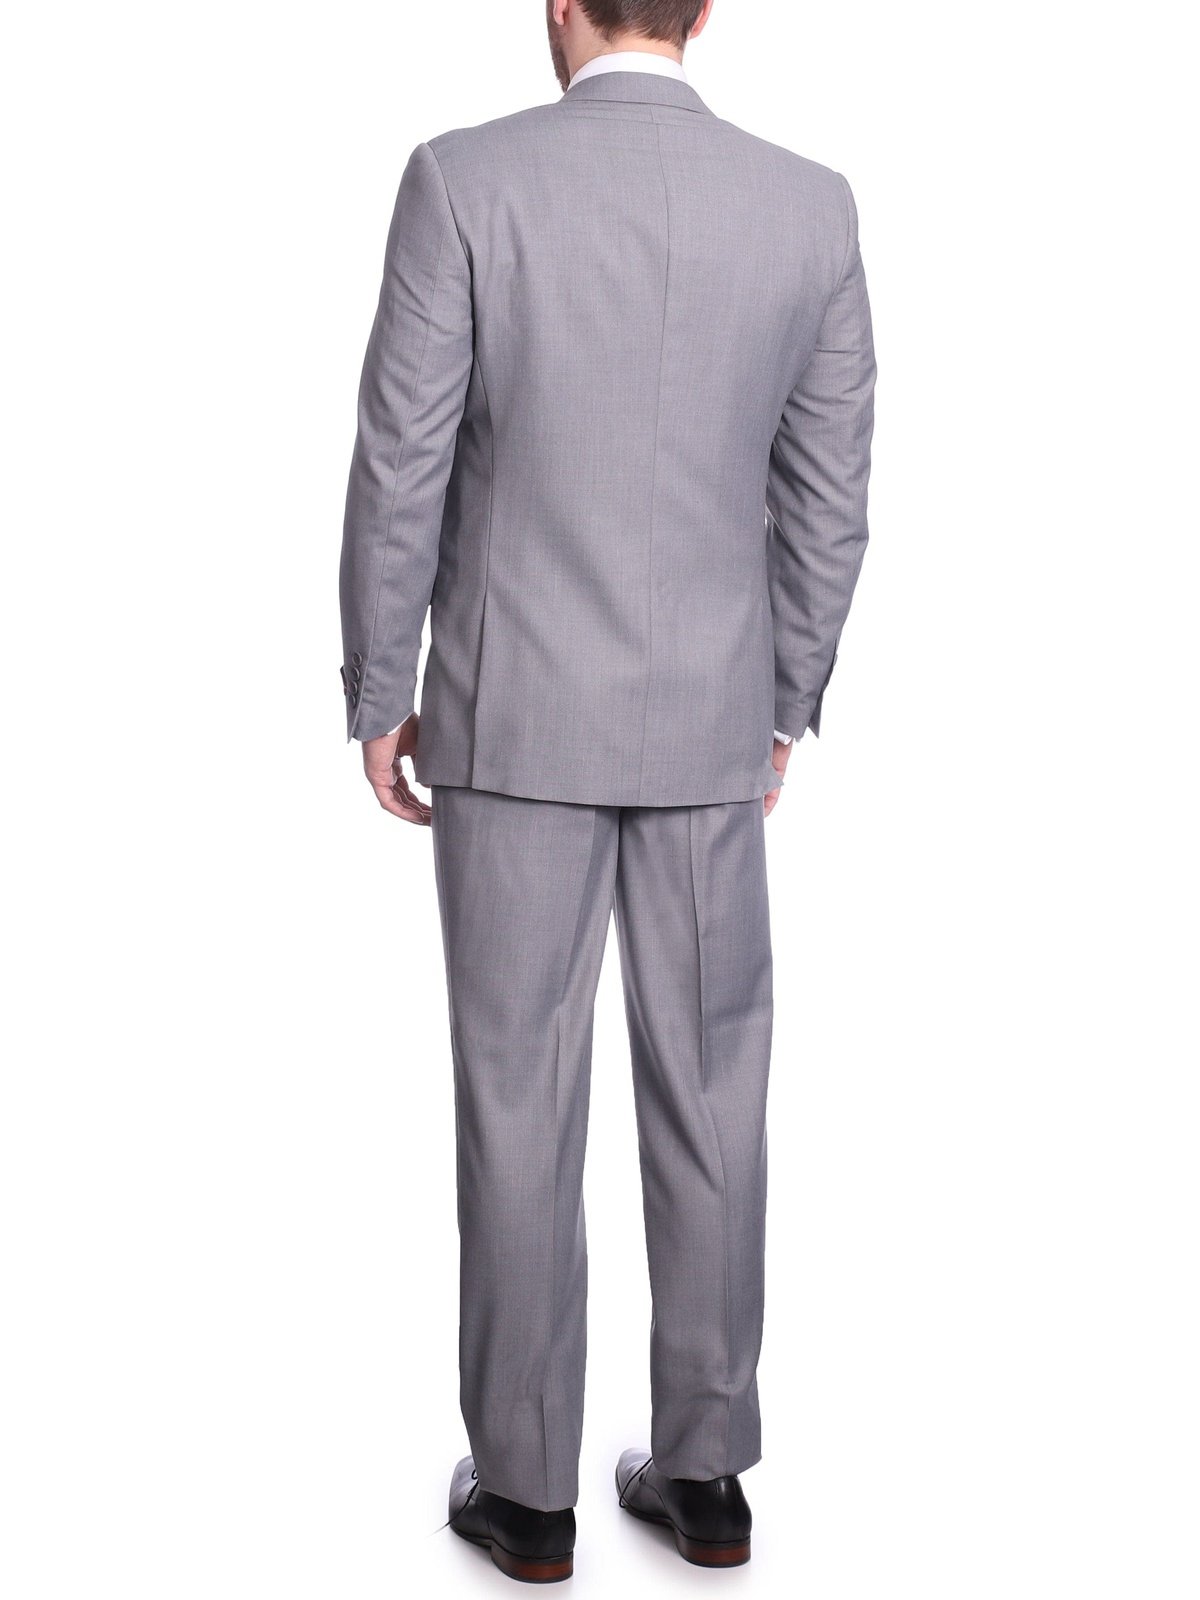 back view of light gray classic fit men's suit